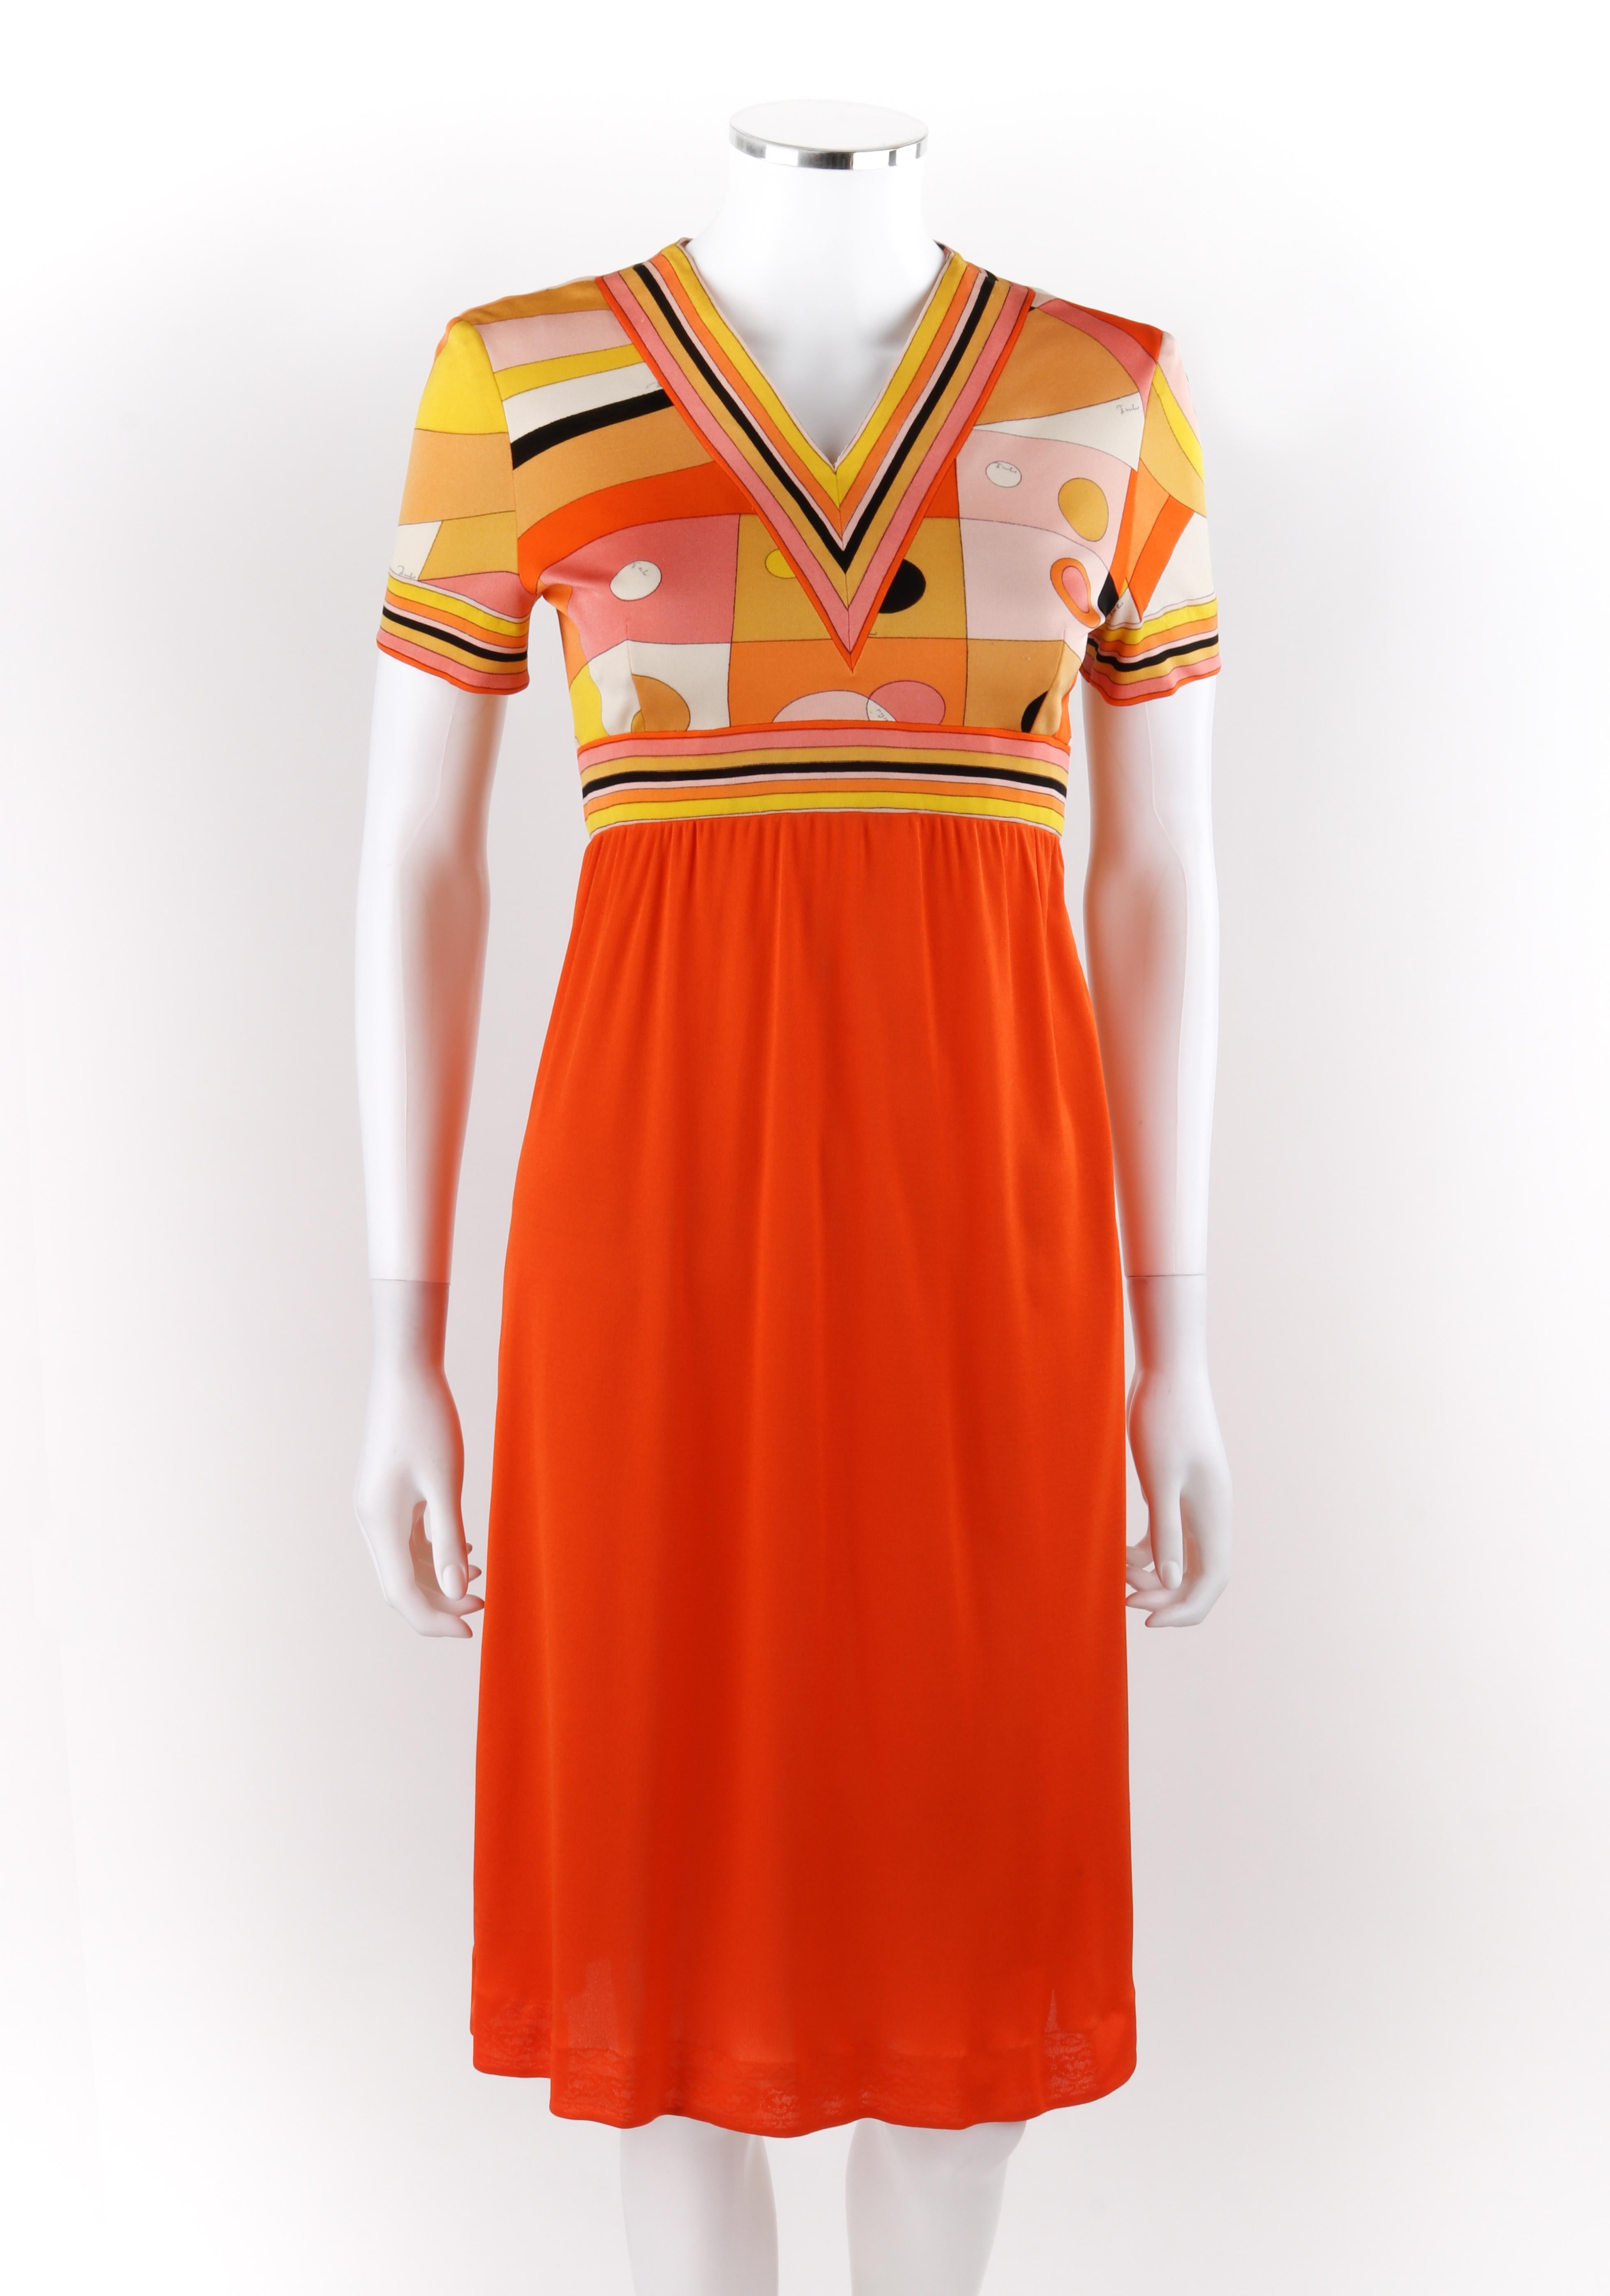 EMILIO PUCCI c.1960's Orange Geometric Op Art Signature Print Silk Empire Dress
 
Circa: 1960’s
Label(s): Emilio Pucci; Made of Lord & Taylor
Designer: Emilio Pucci
Style: Empire dress
Color(s): Shades of orange, yellow, pink, white, black
Lined: